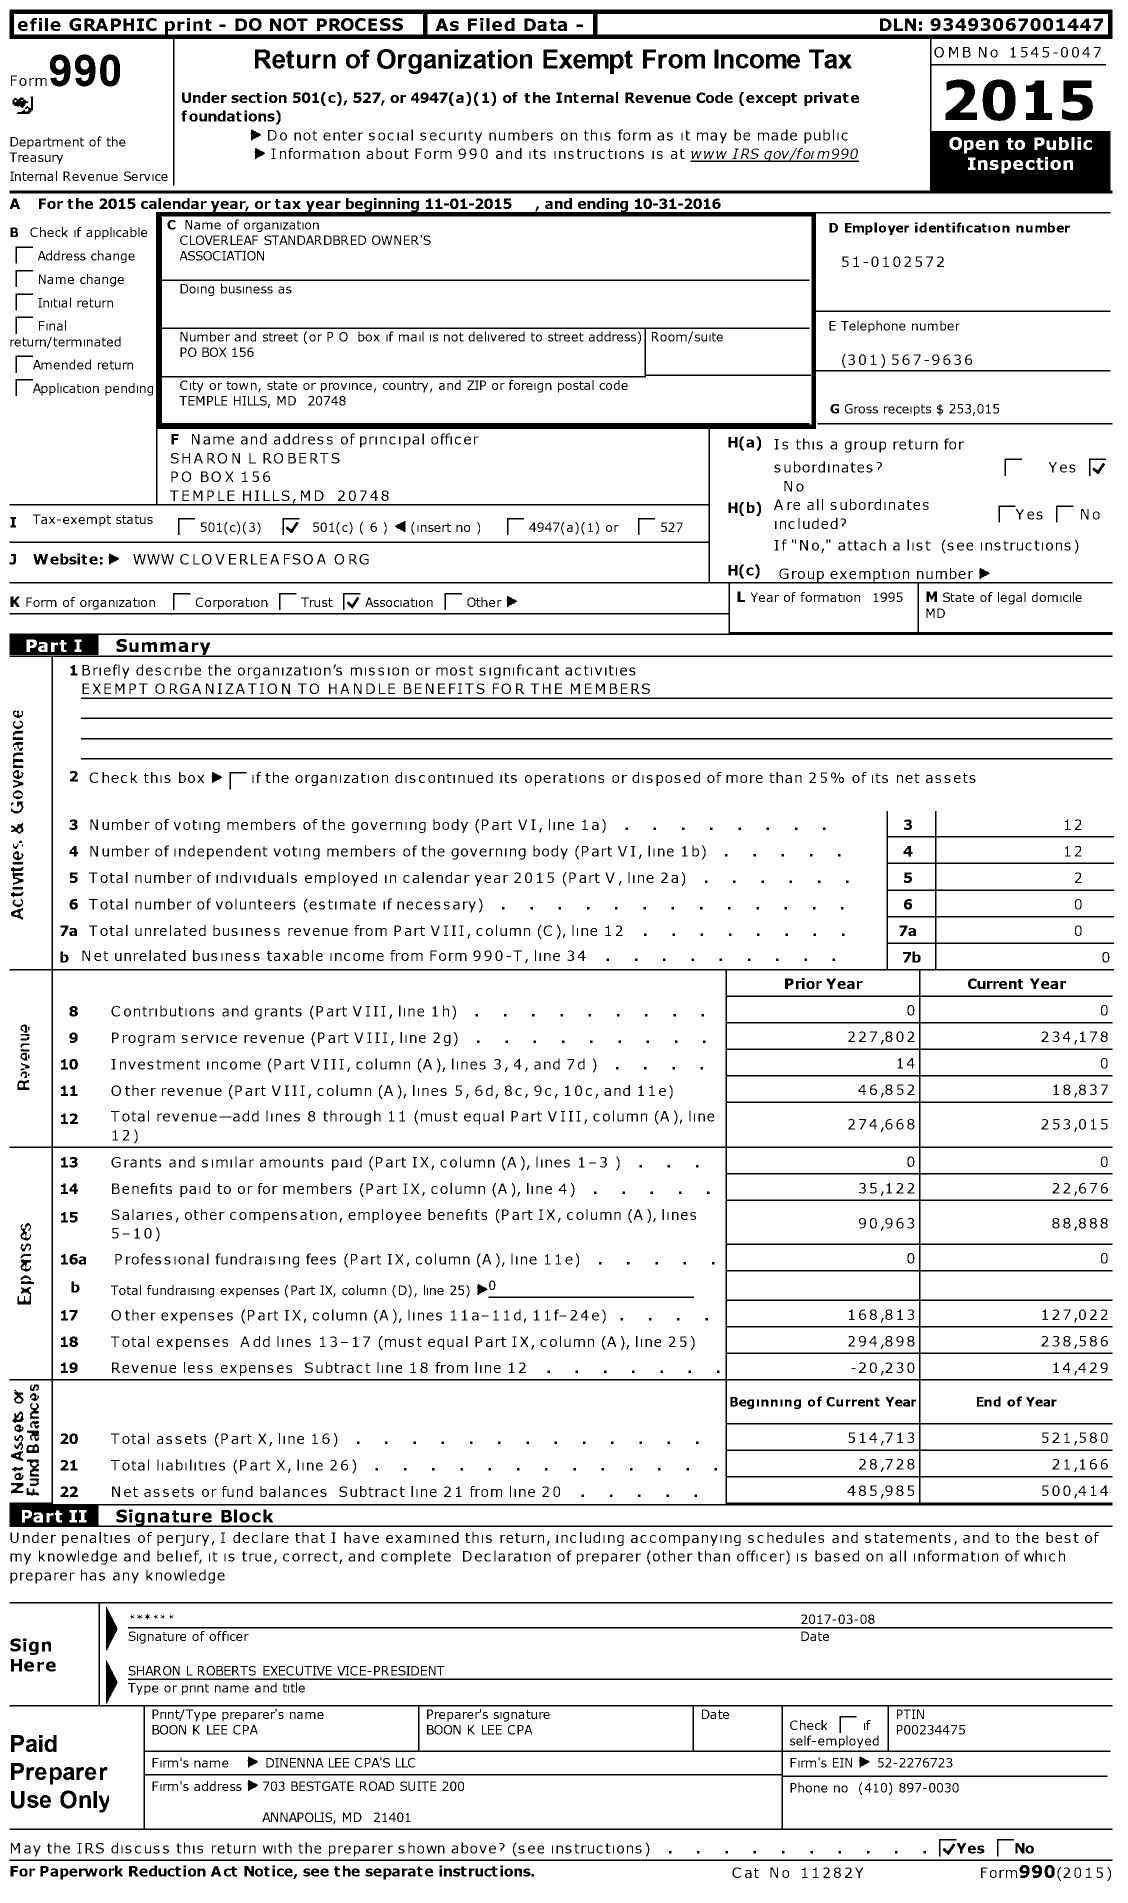 Image of first page of 2015 Form 990O for Cloverleaf Standardbred Owner's Association